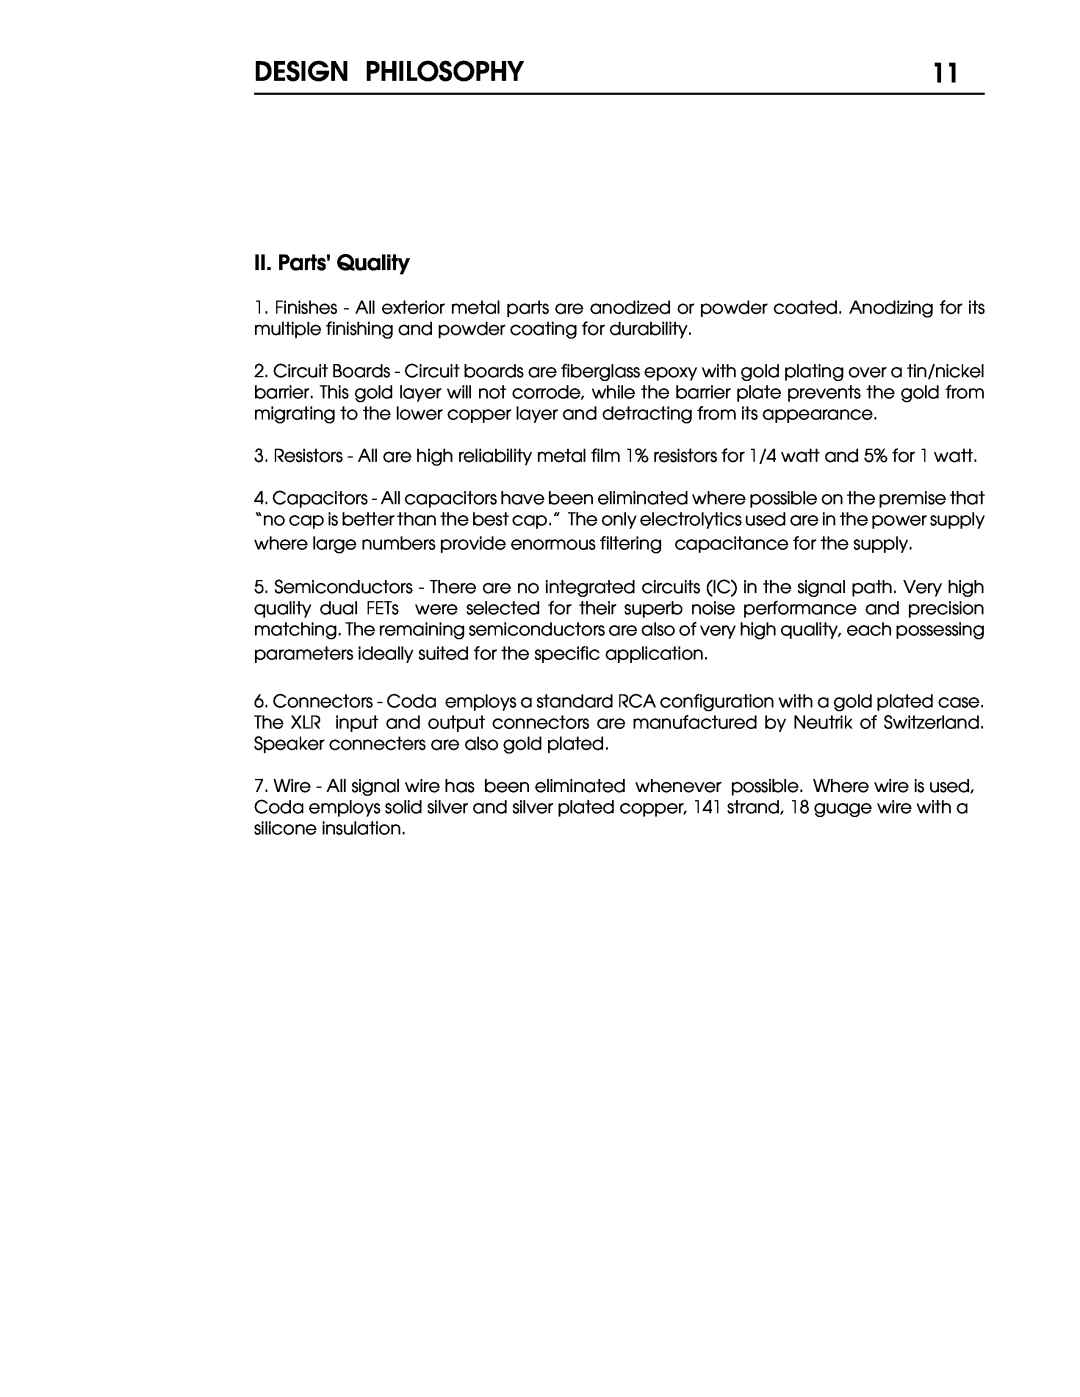 Coda S5 operation manual Design Philosophy, II. Parts Quality 